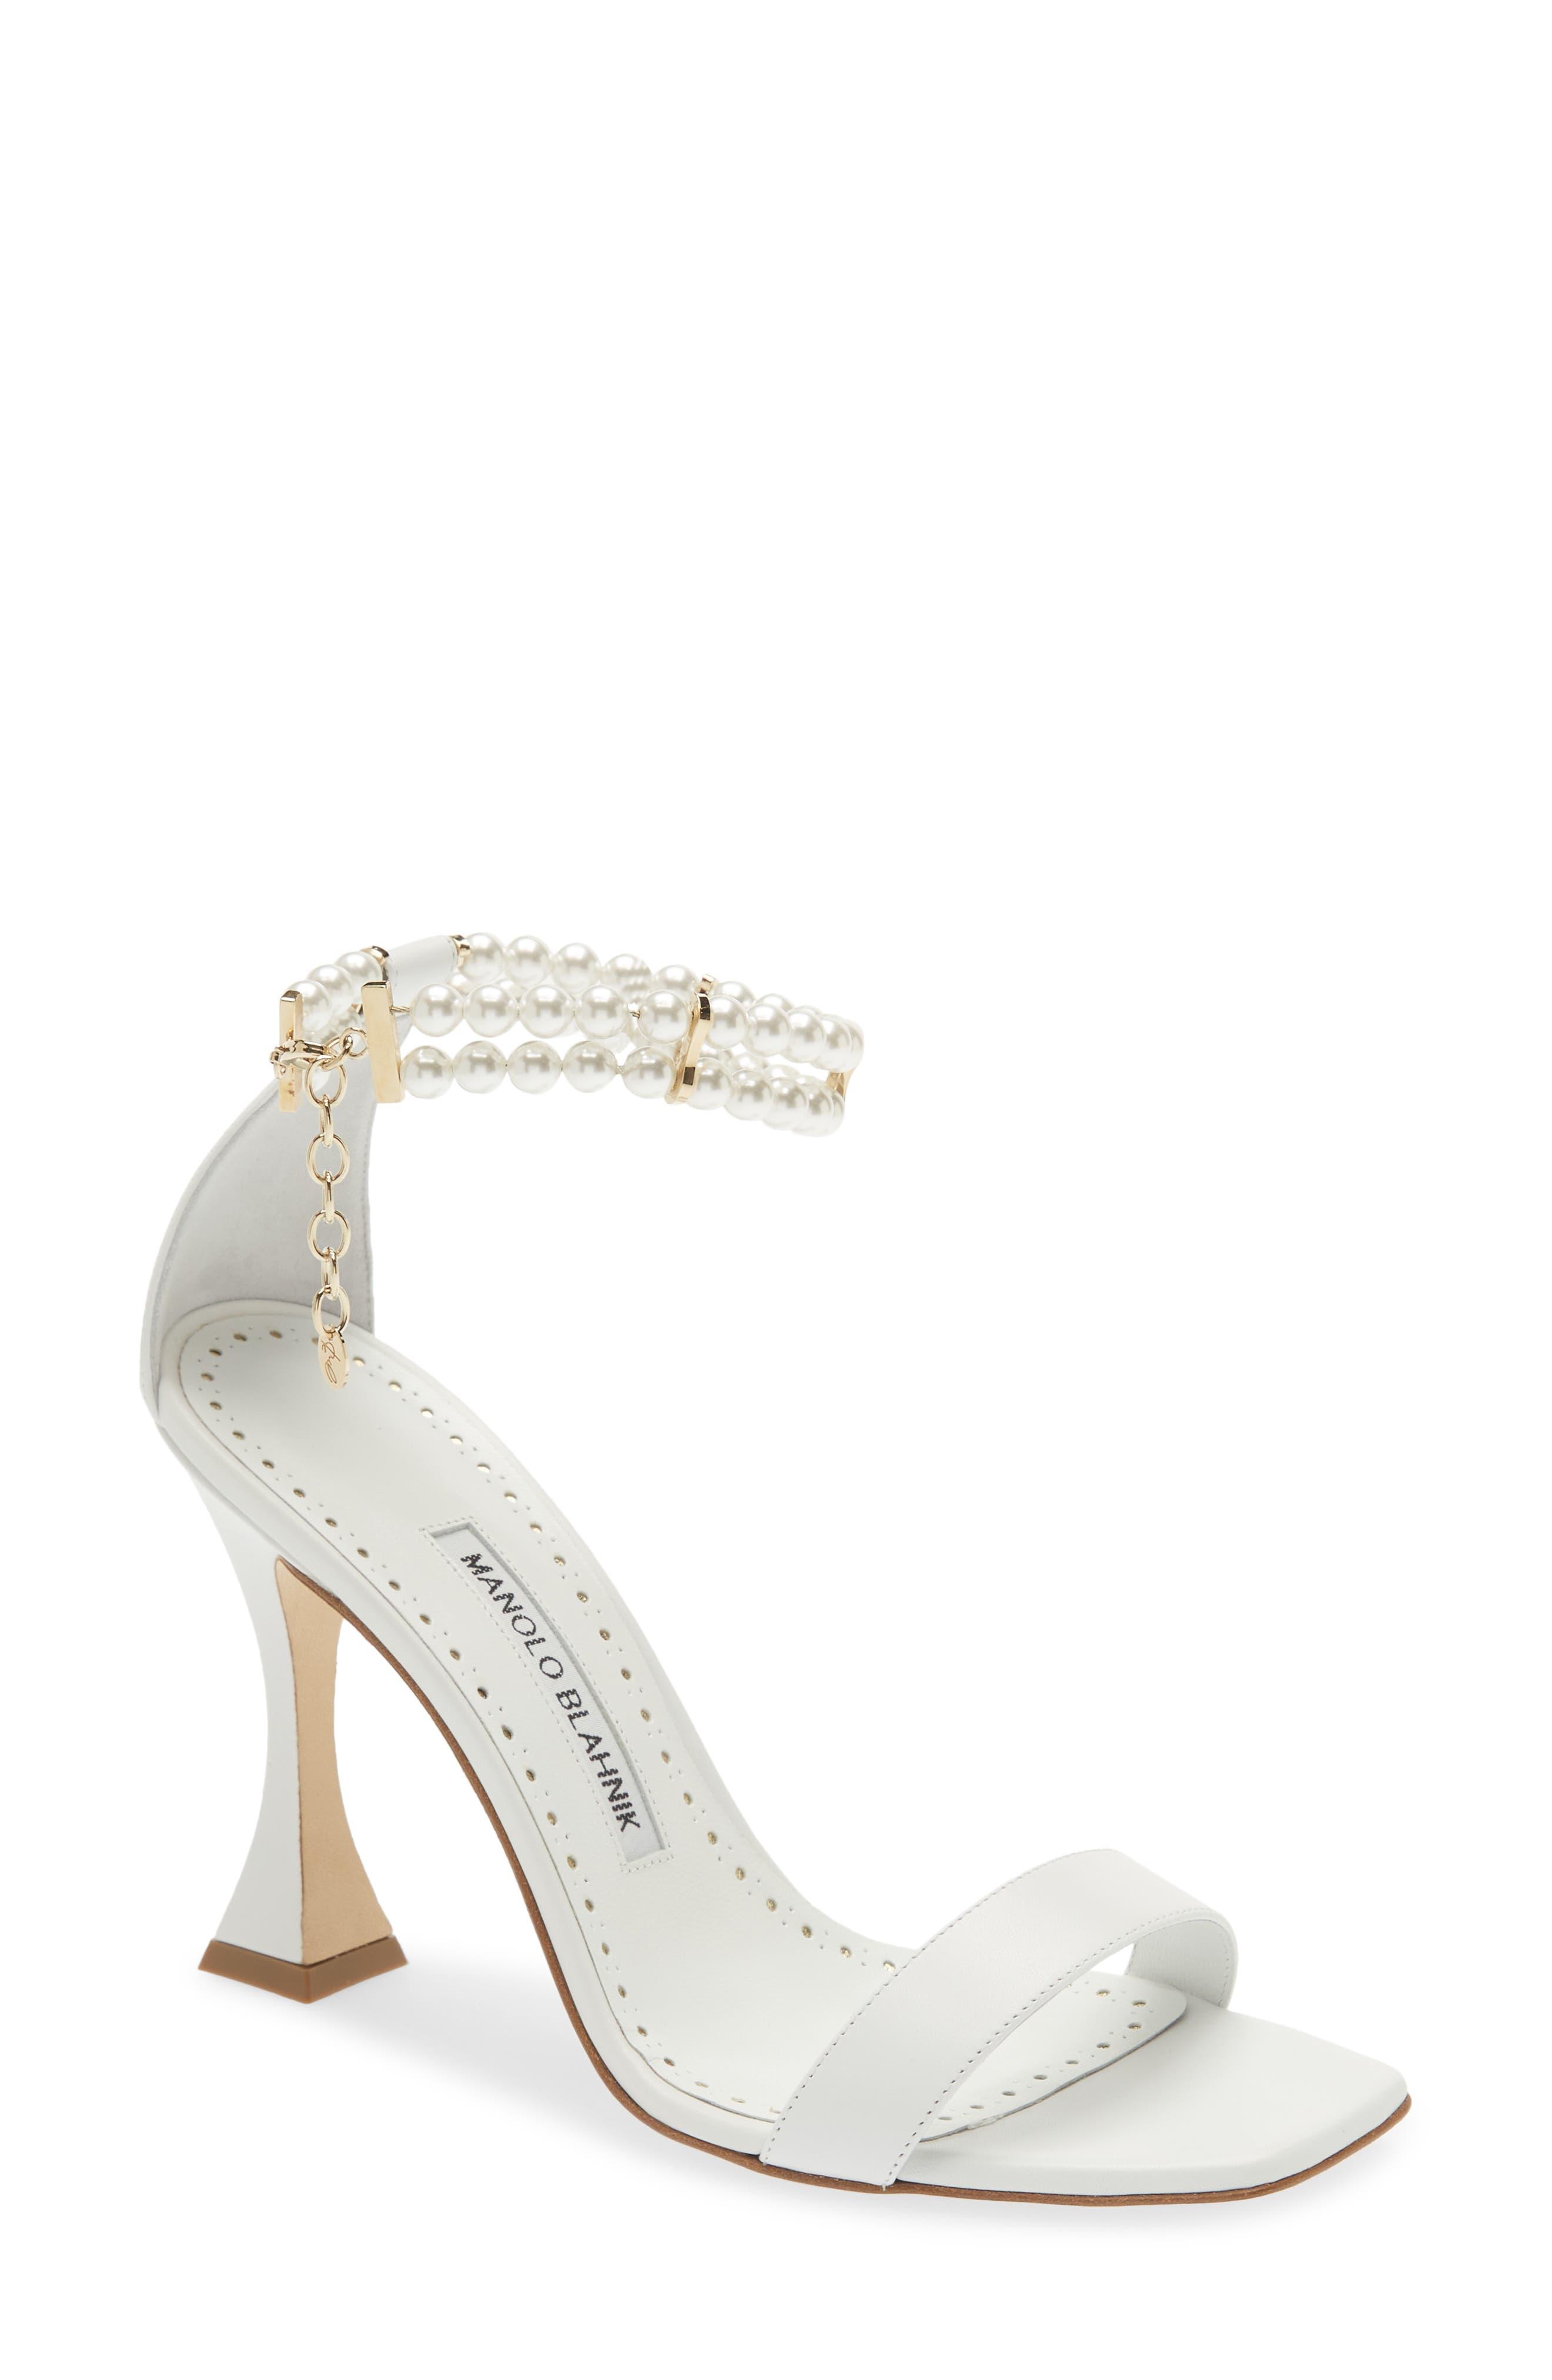 Manolo Blahnik Charona Imitation Pearl Ankle Strap Sandal in White | Lyst